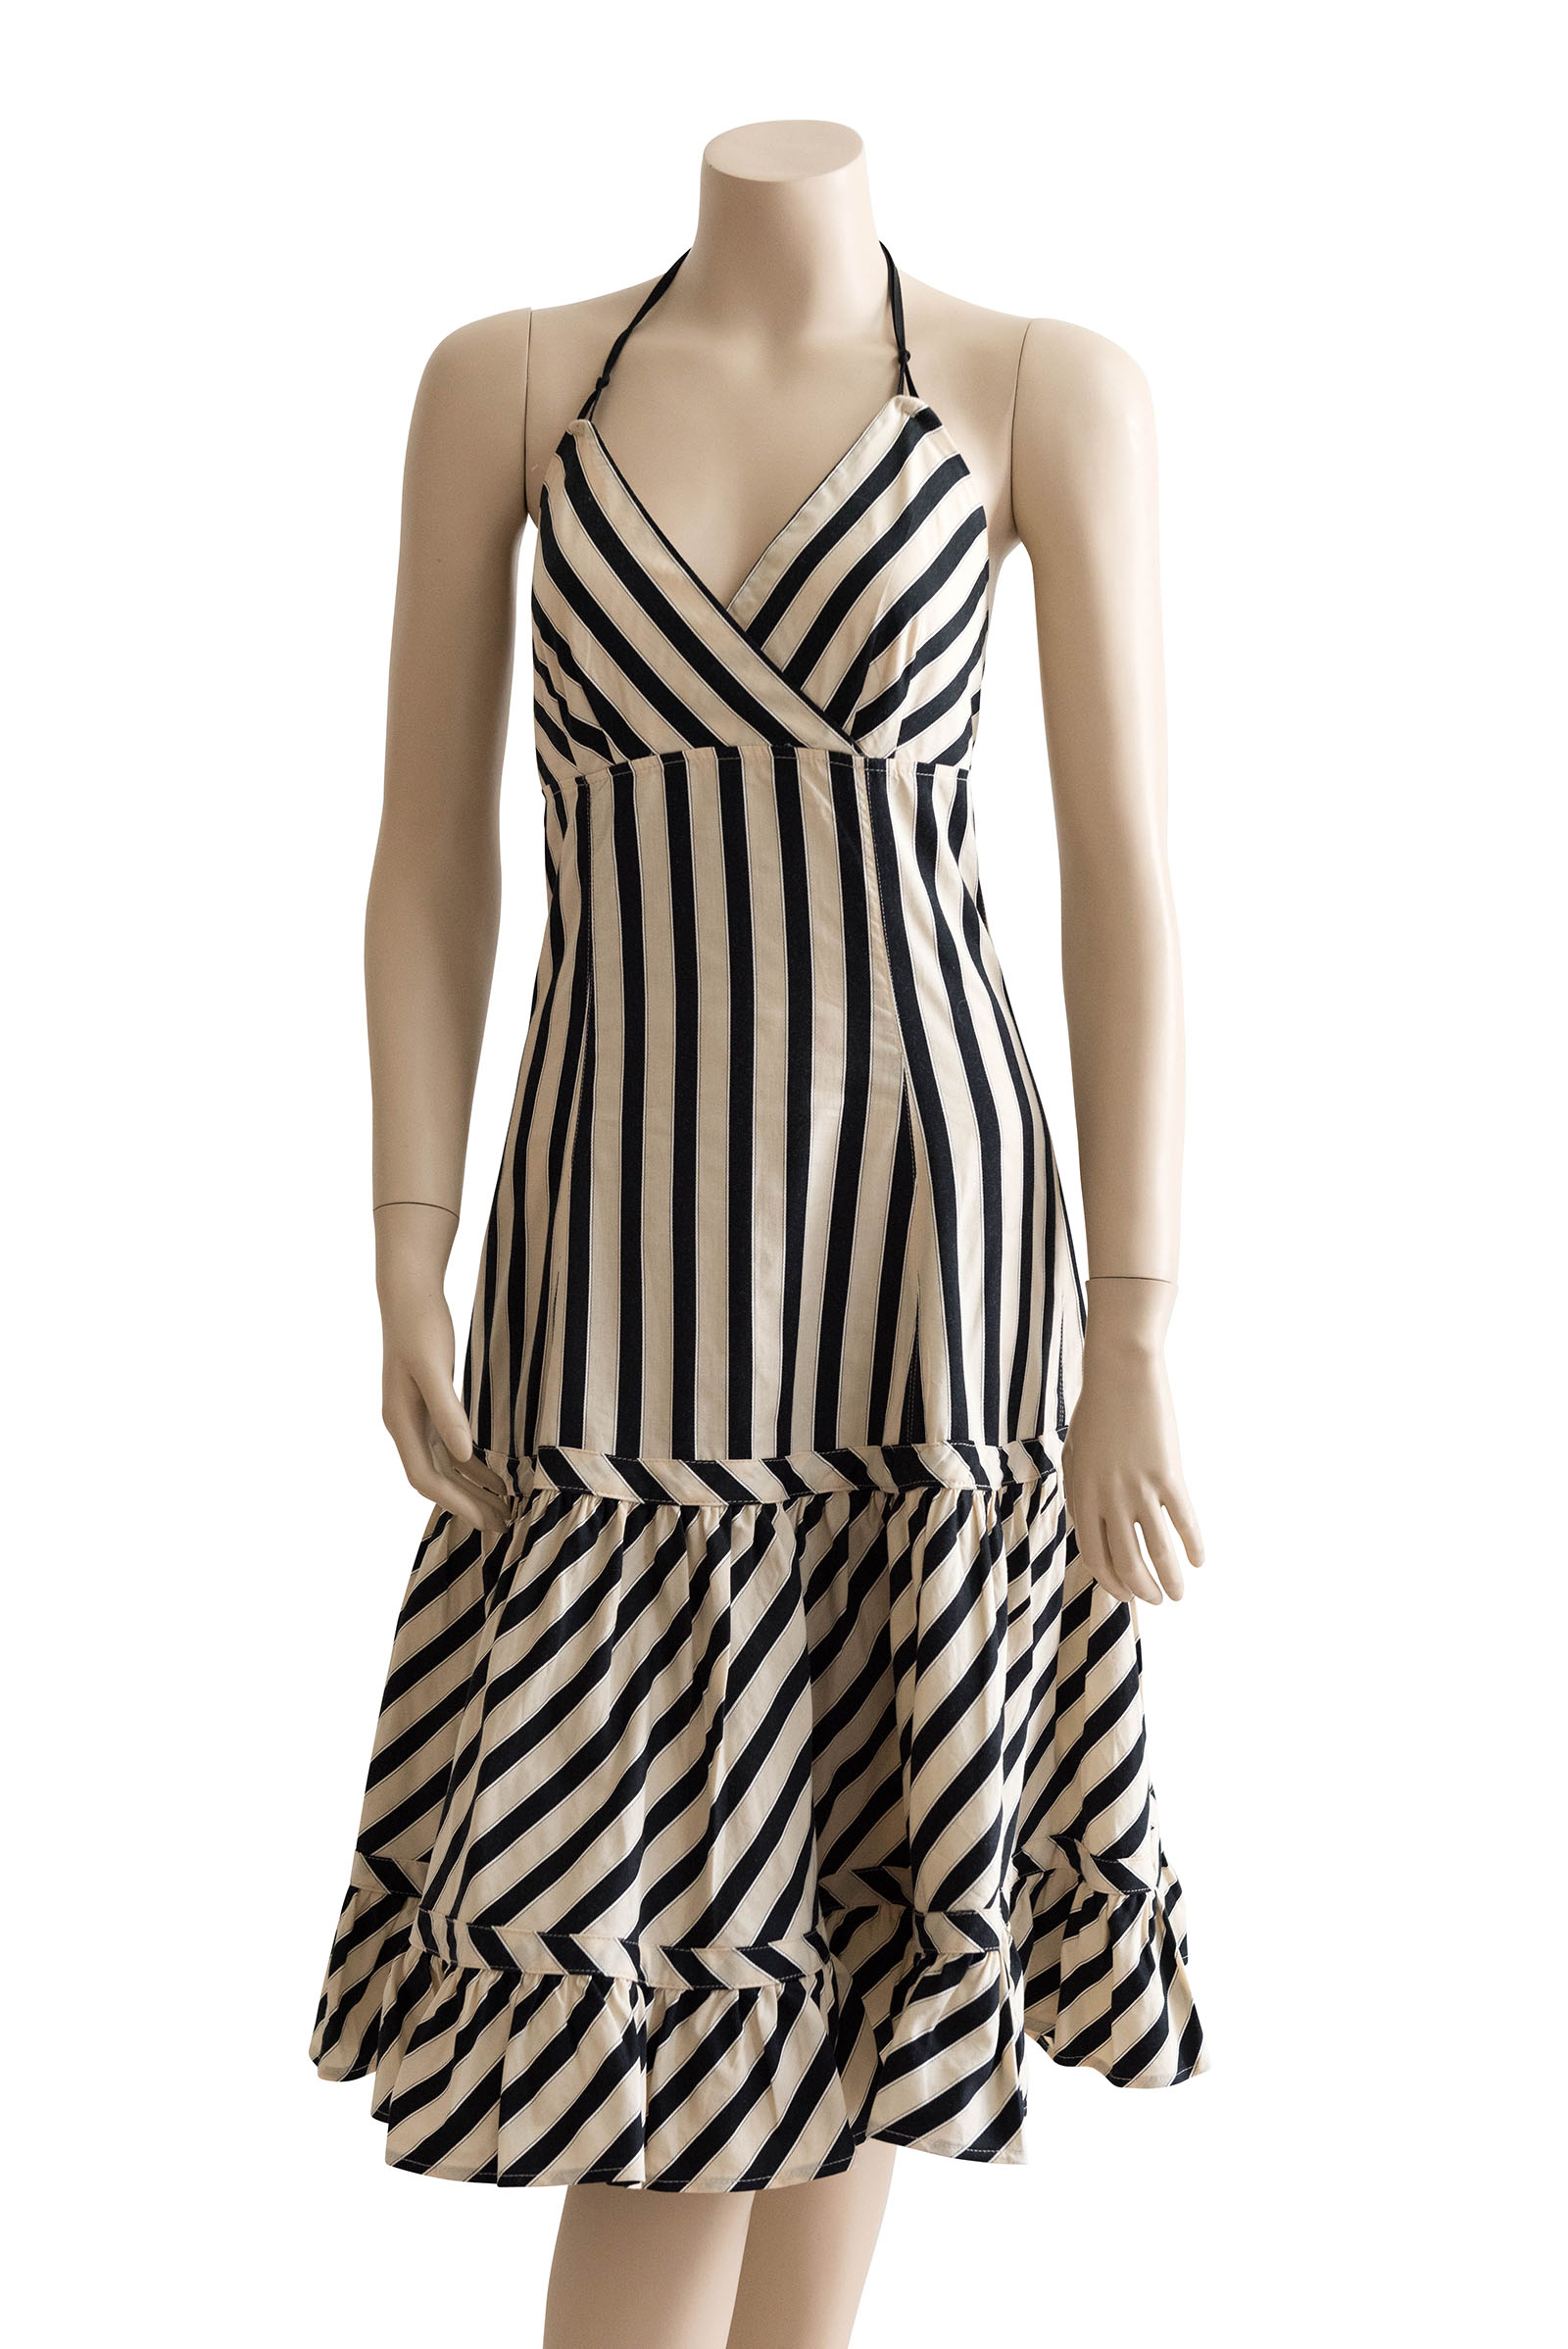 Womens Witchery Cream & Black Striped Halterneck Dress Preloved - Size ...